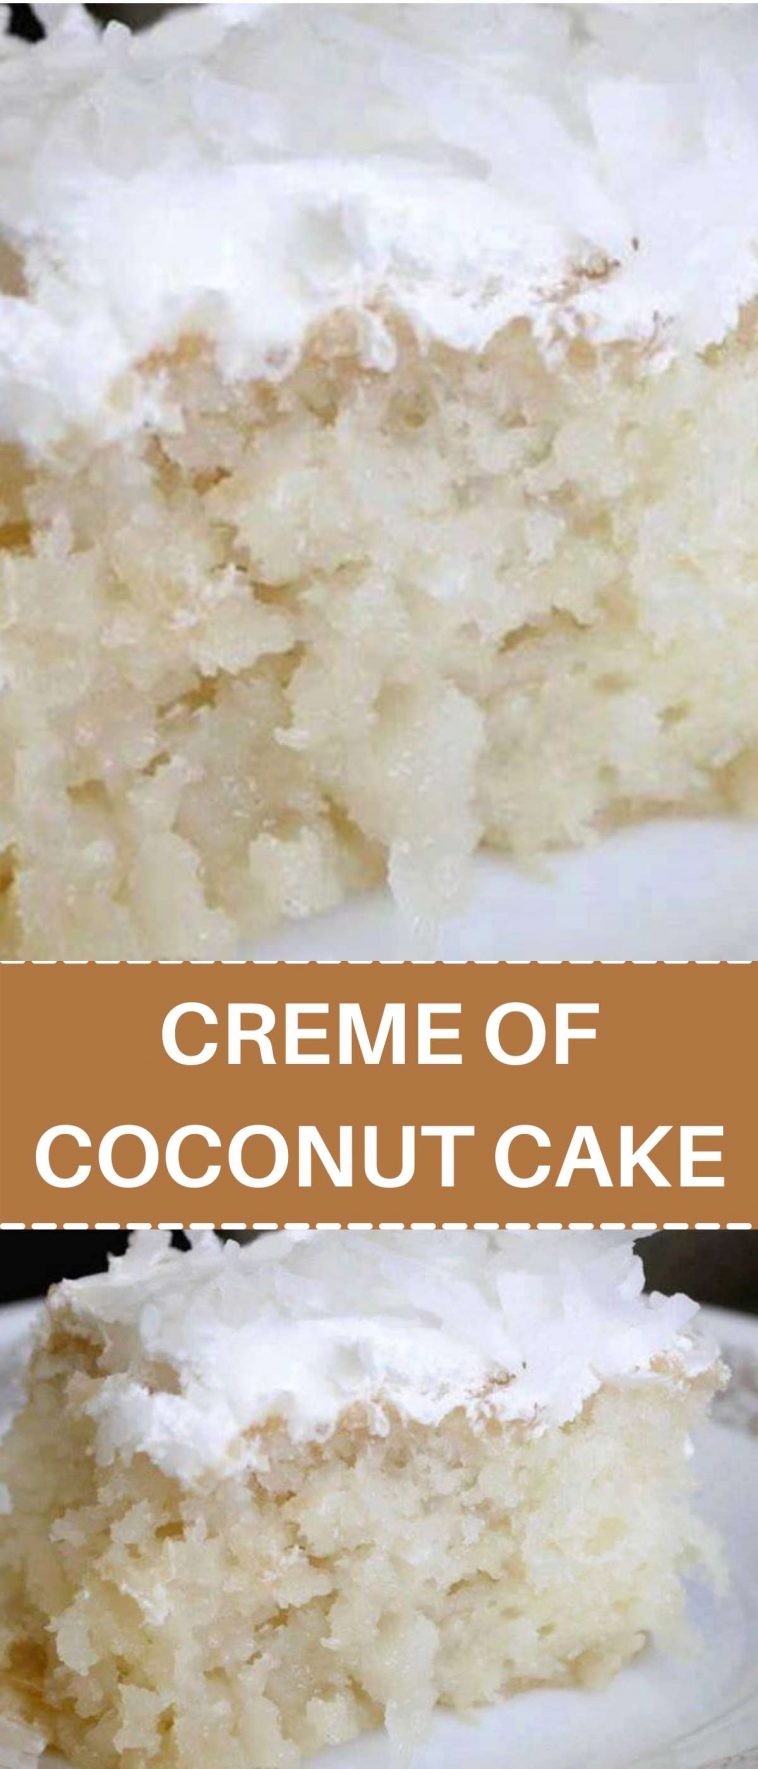 CREME OF COCONUT CAKE